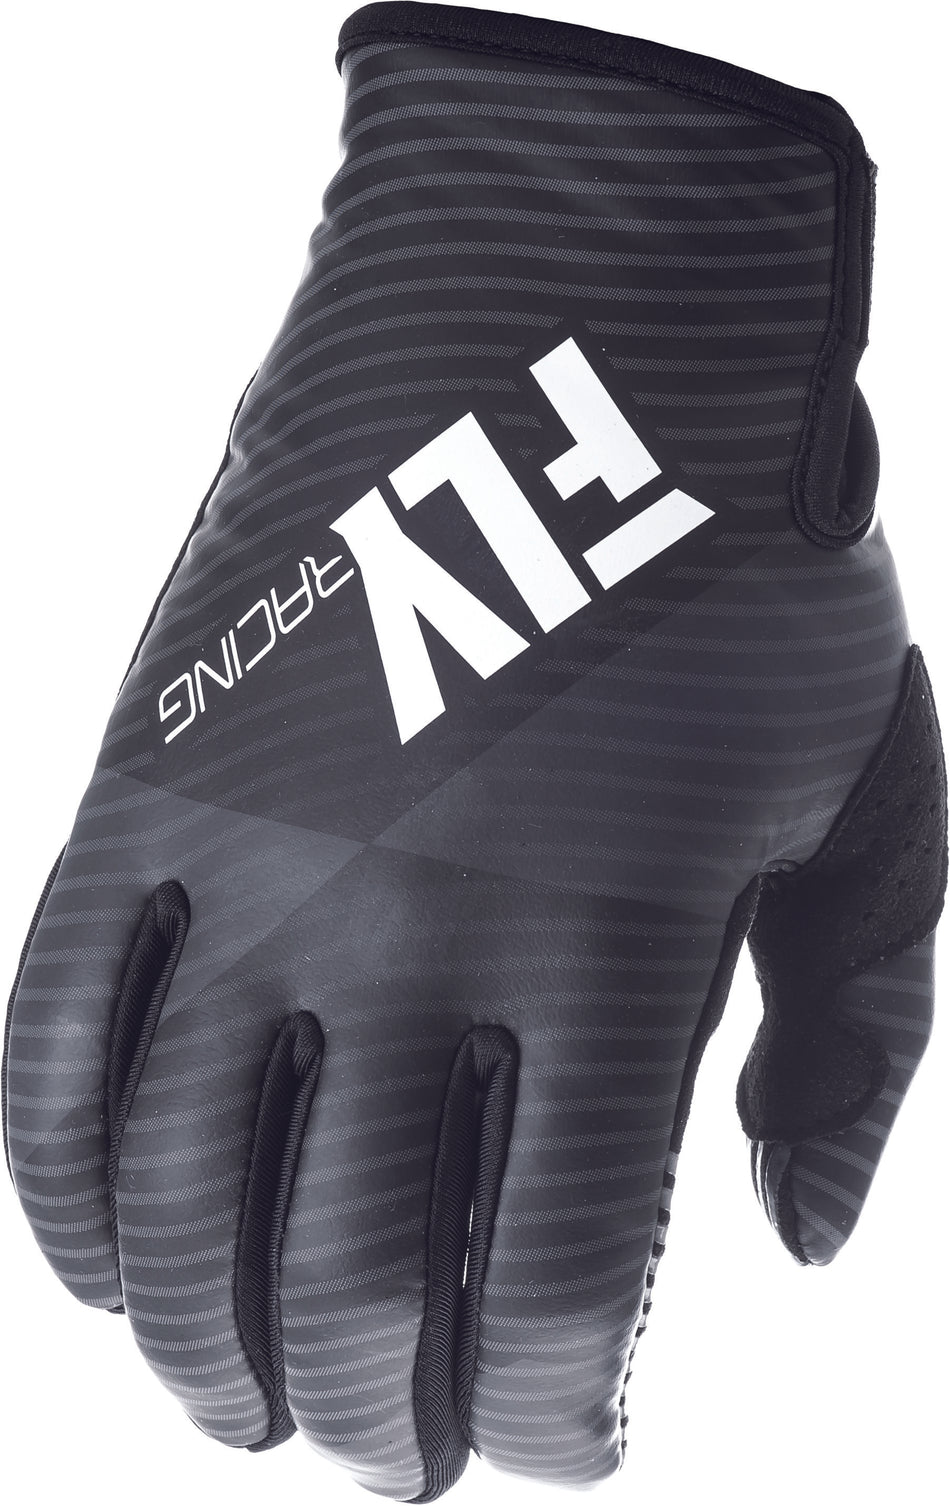 FLY RACING 907 Neoprene Gloves Black/Grey Sz 7 369-64007